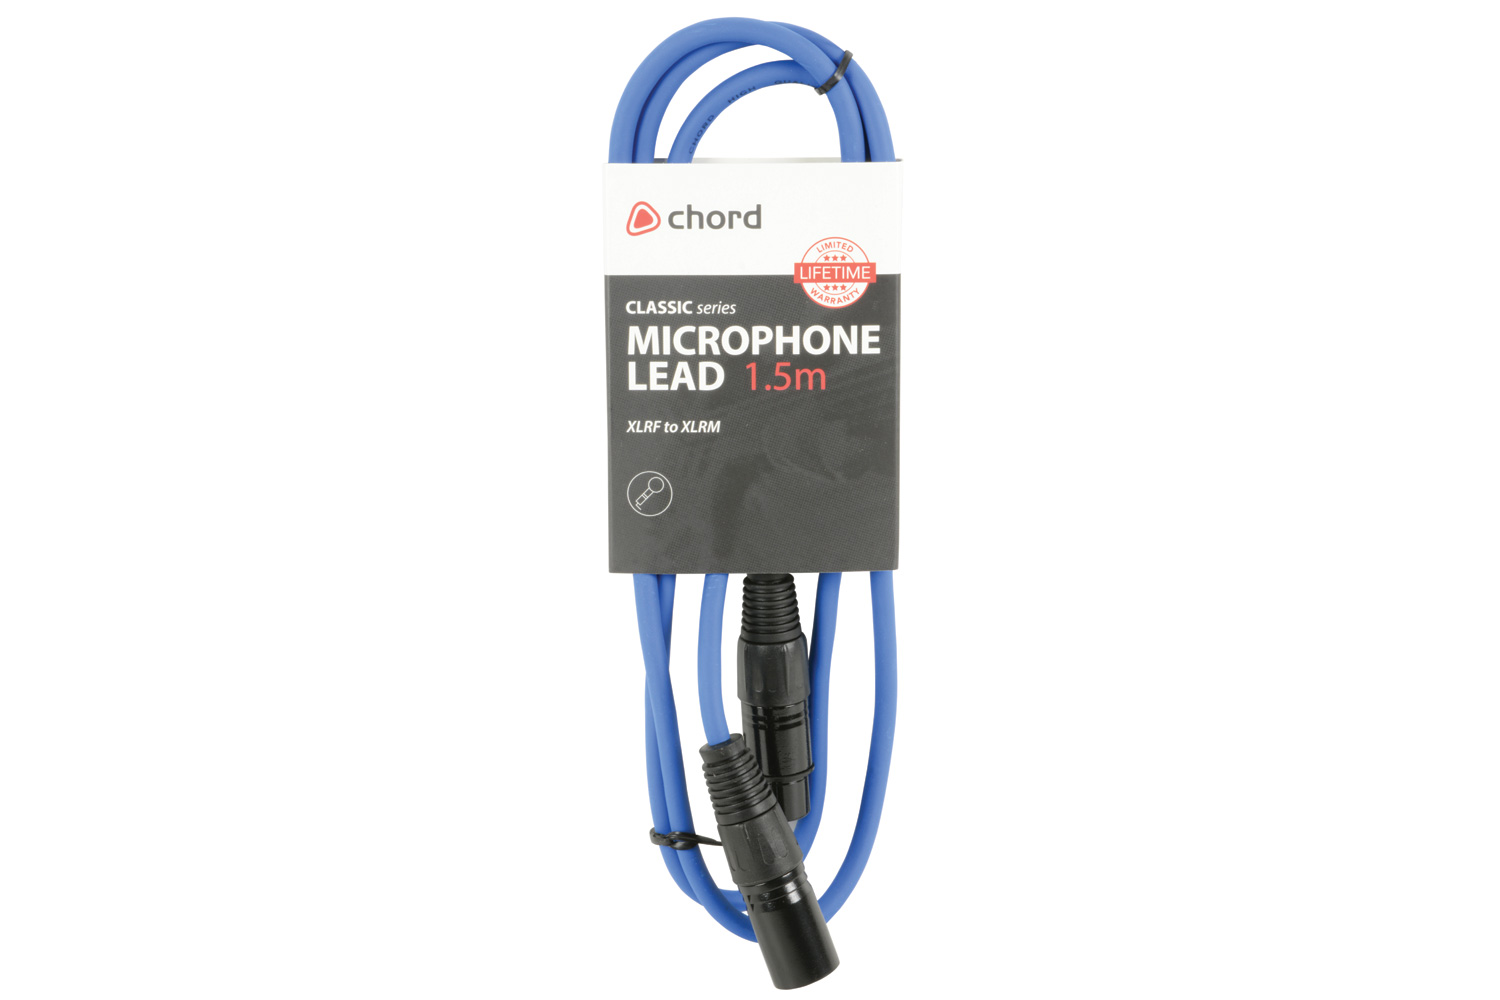 Chord Classic Microphone Lead XLR Female - Male 1.5m Blue for sale online